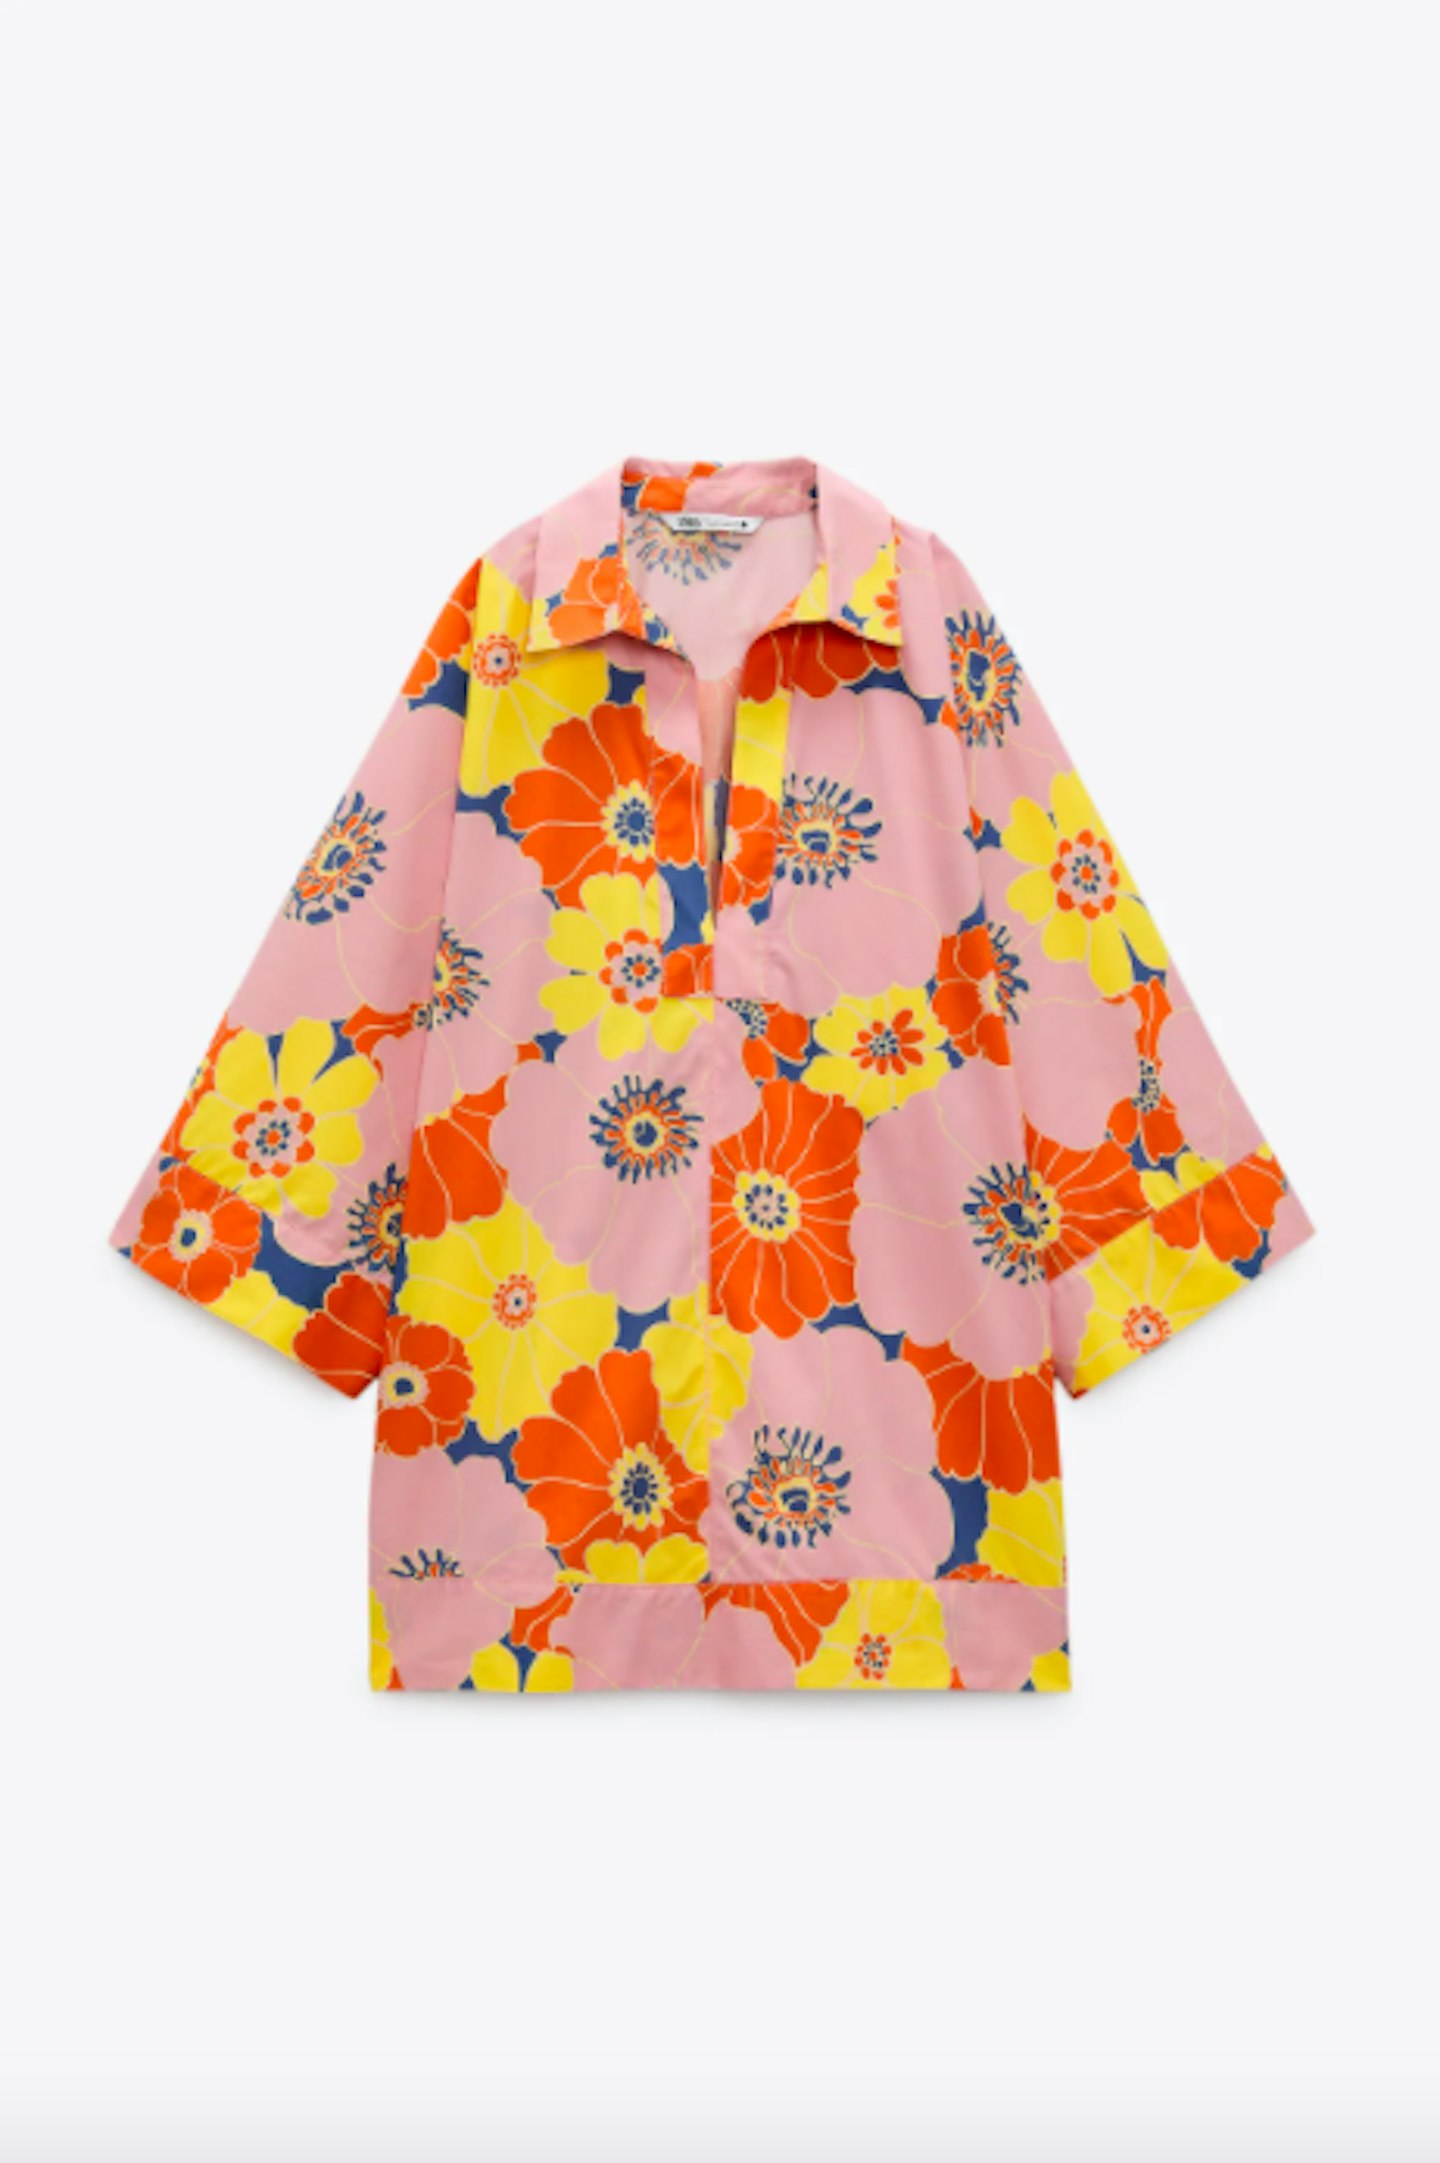 Zara, Printed Shirt, £49.99